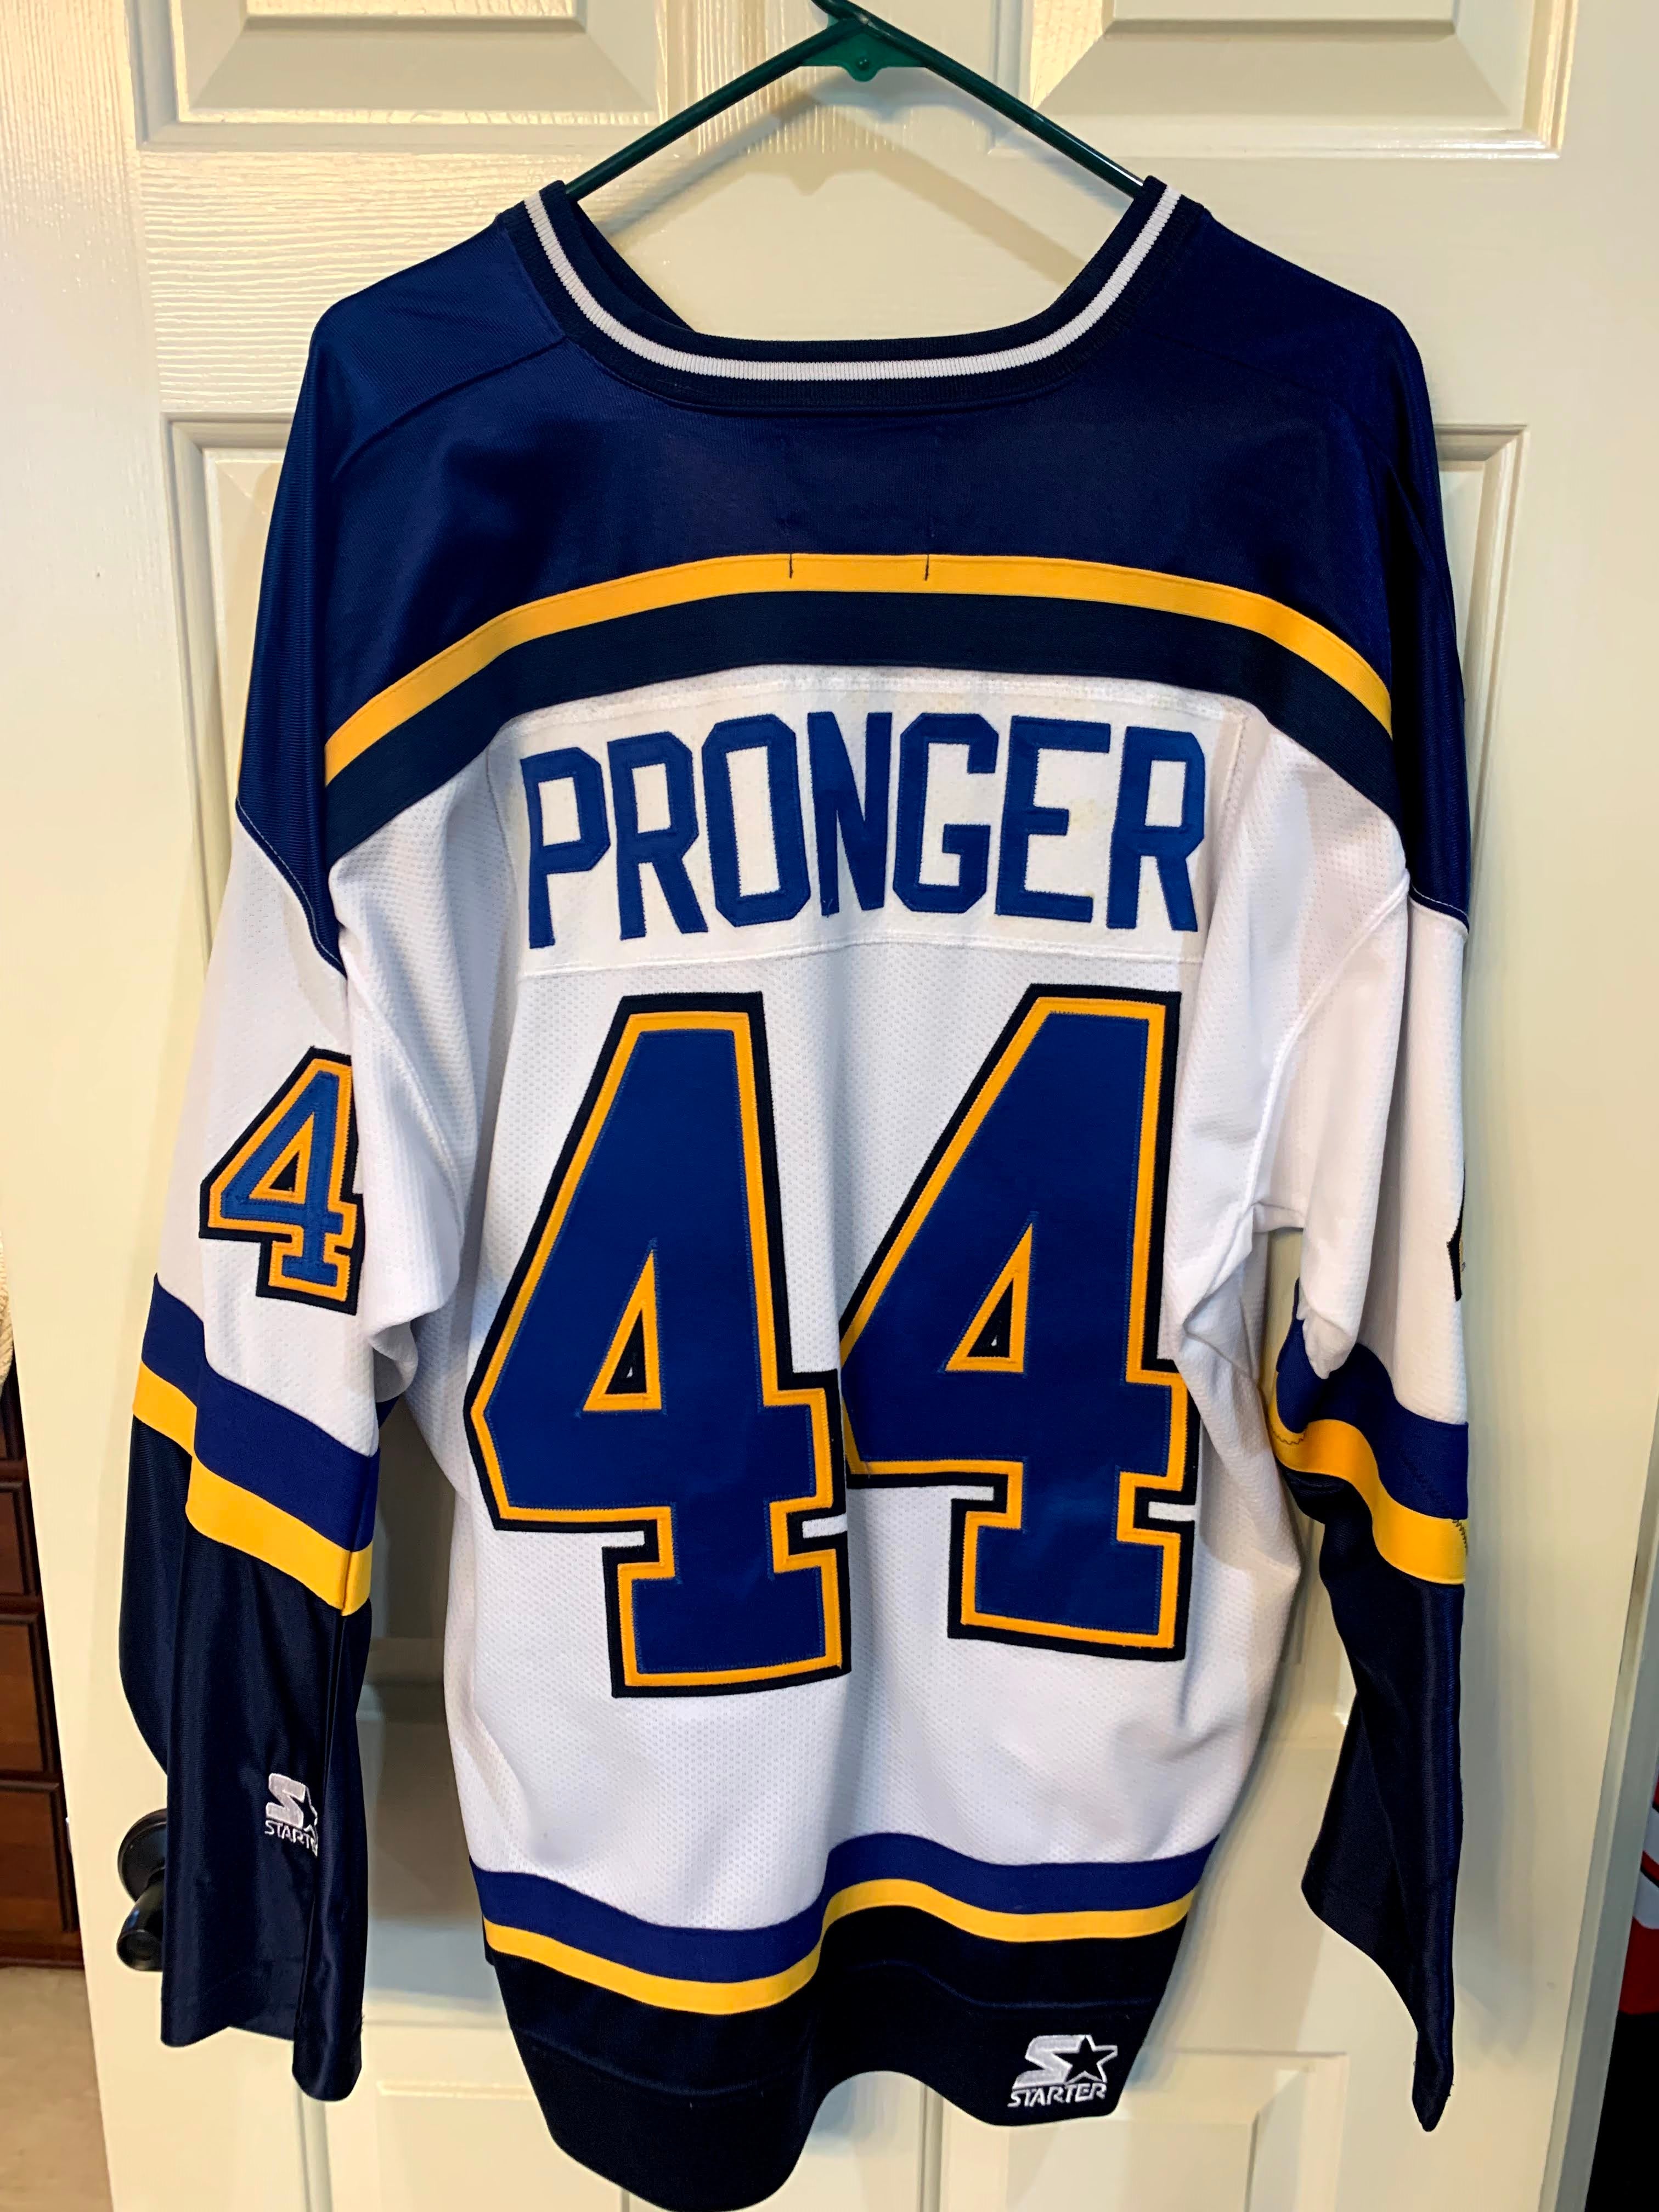 Chris Pronger Jerseys, Chris Pronger Shirts, Apparel, Gear